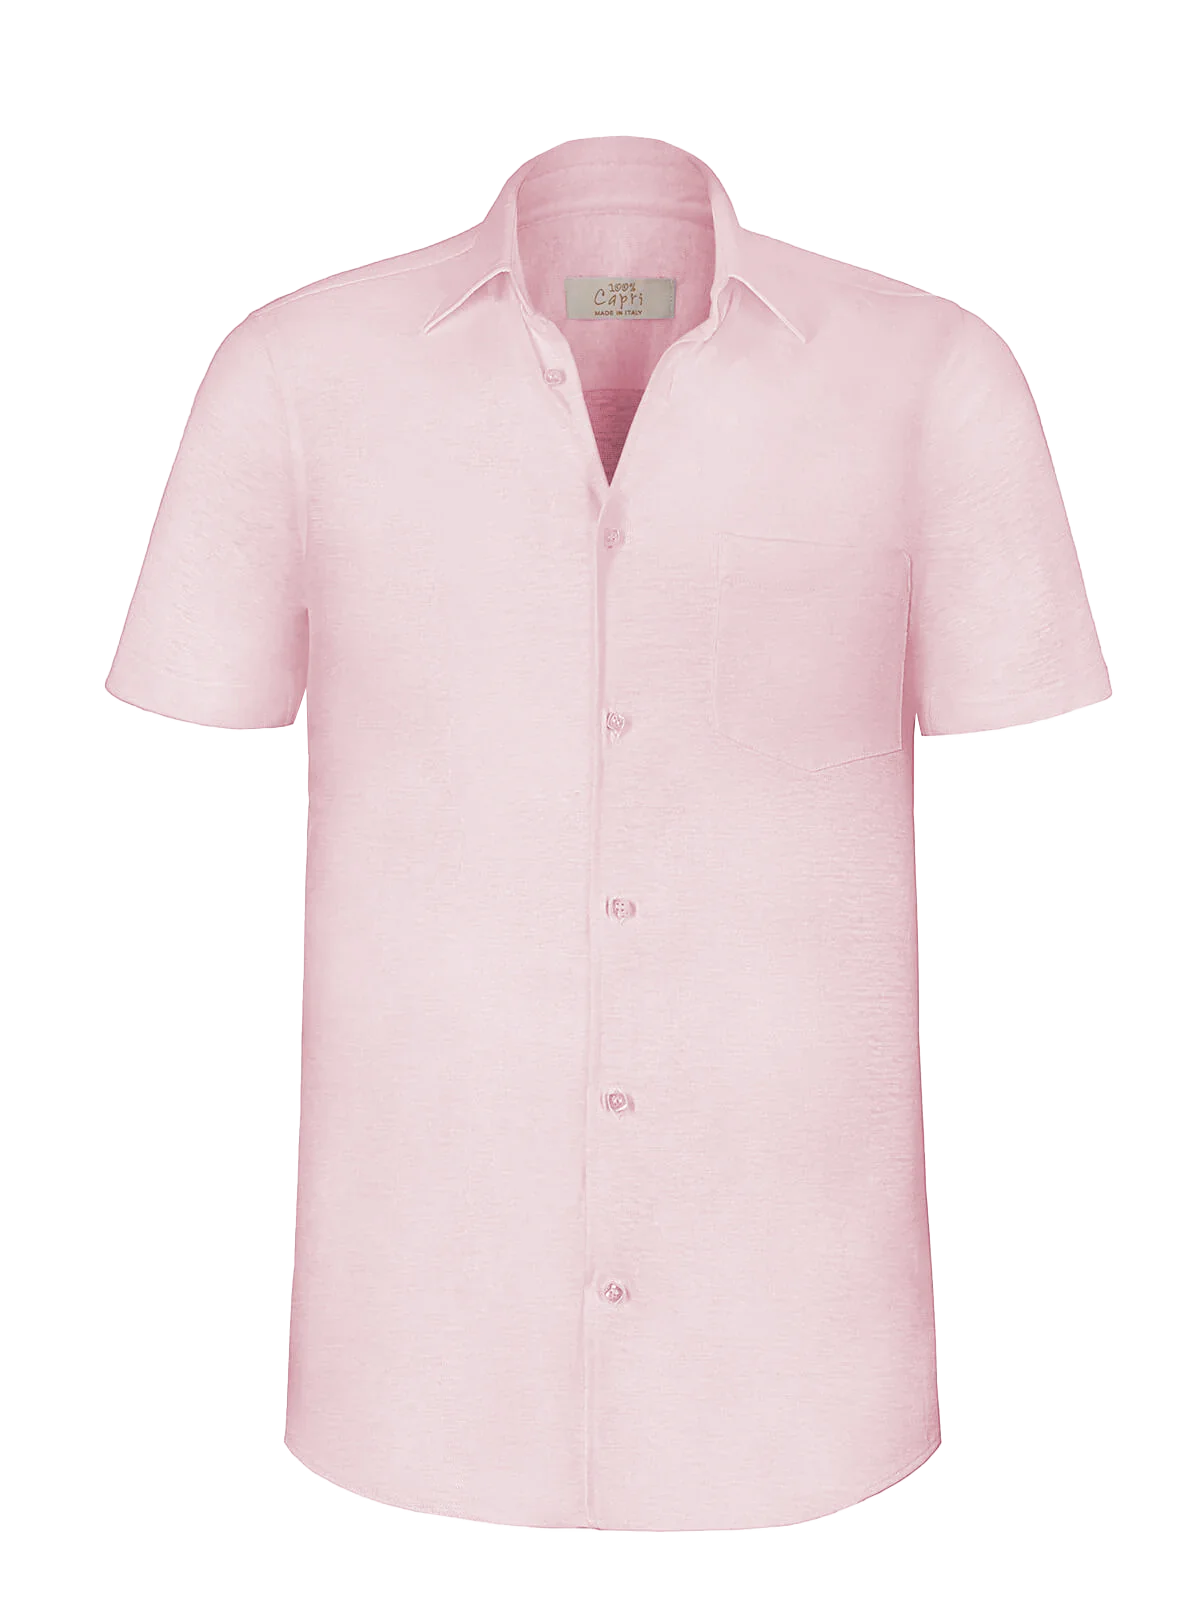 Camicia Short Sleeve 100% Capri pink linen shirt front